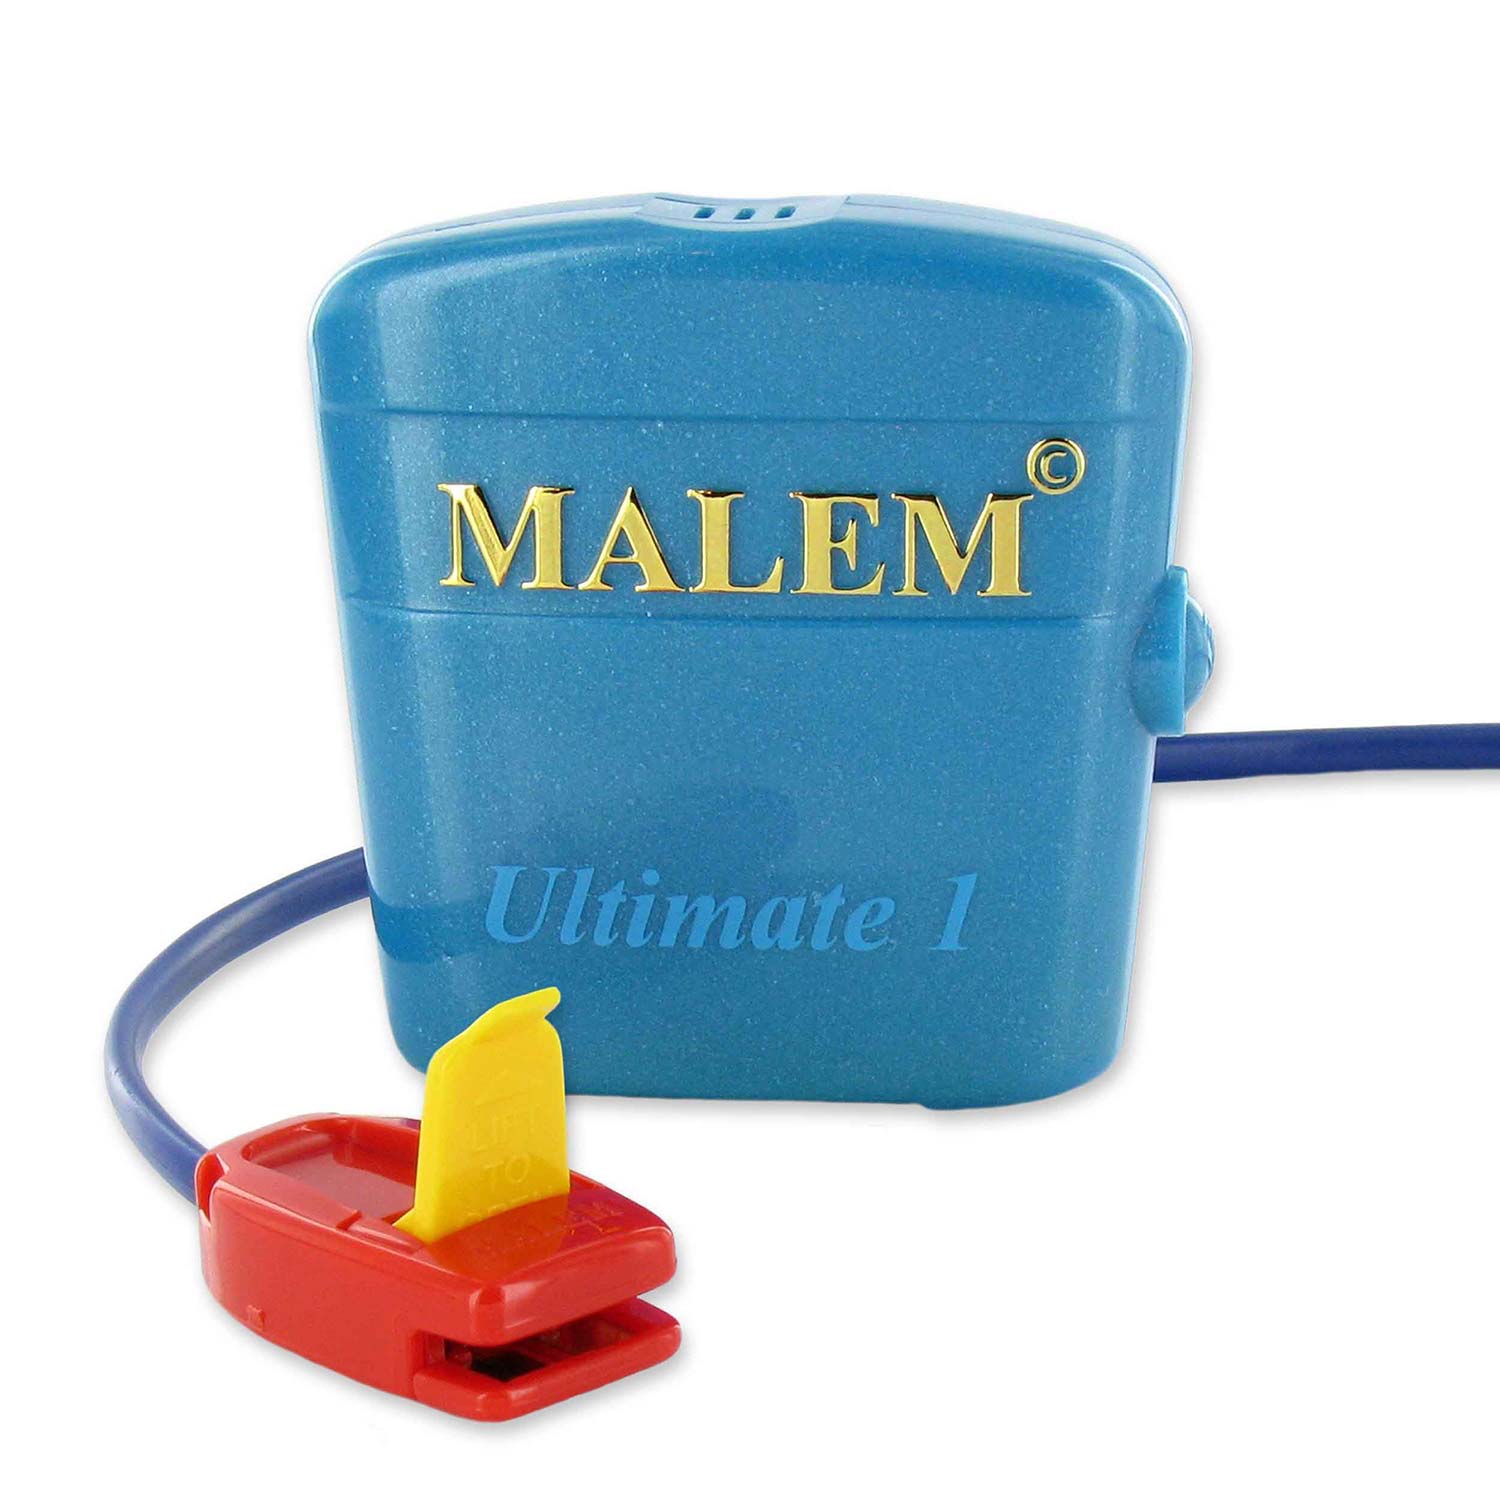 Malem Ultimate Bedwetting Alarm: Bedwetting Store